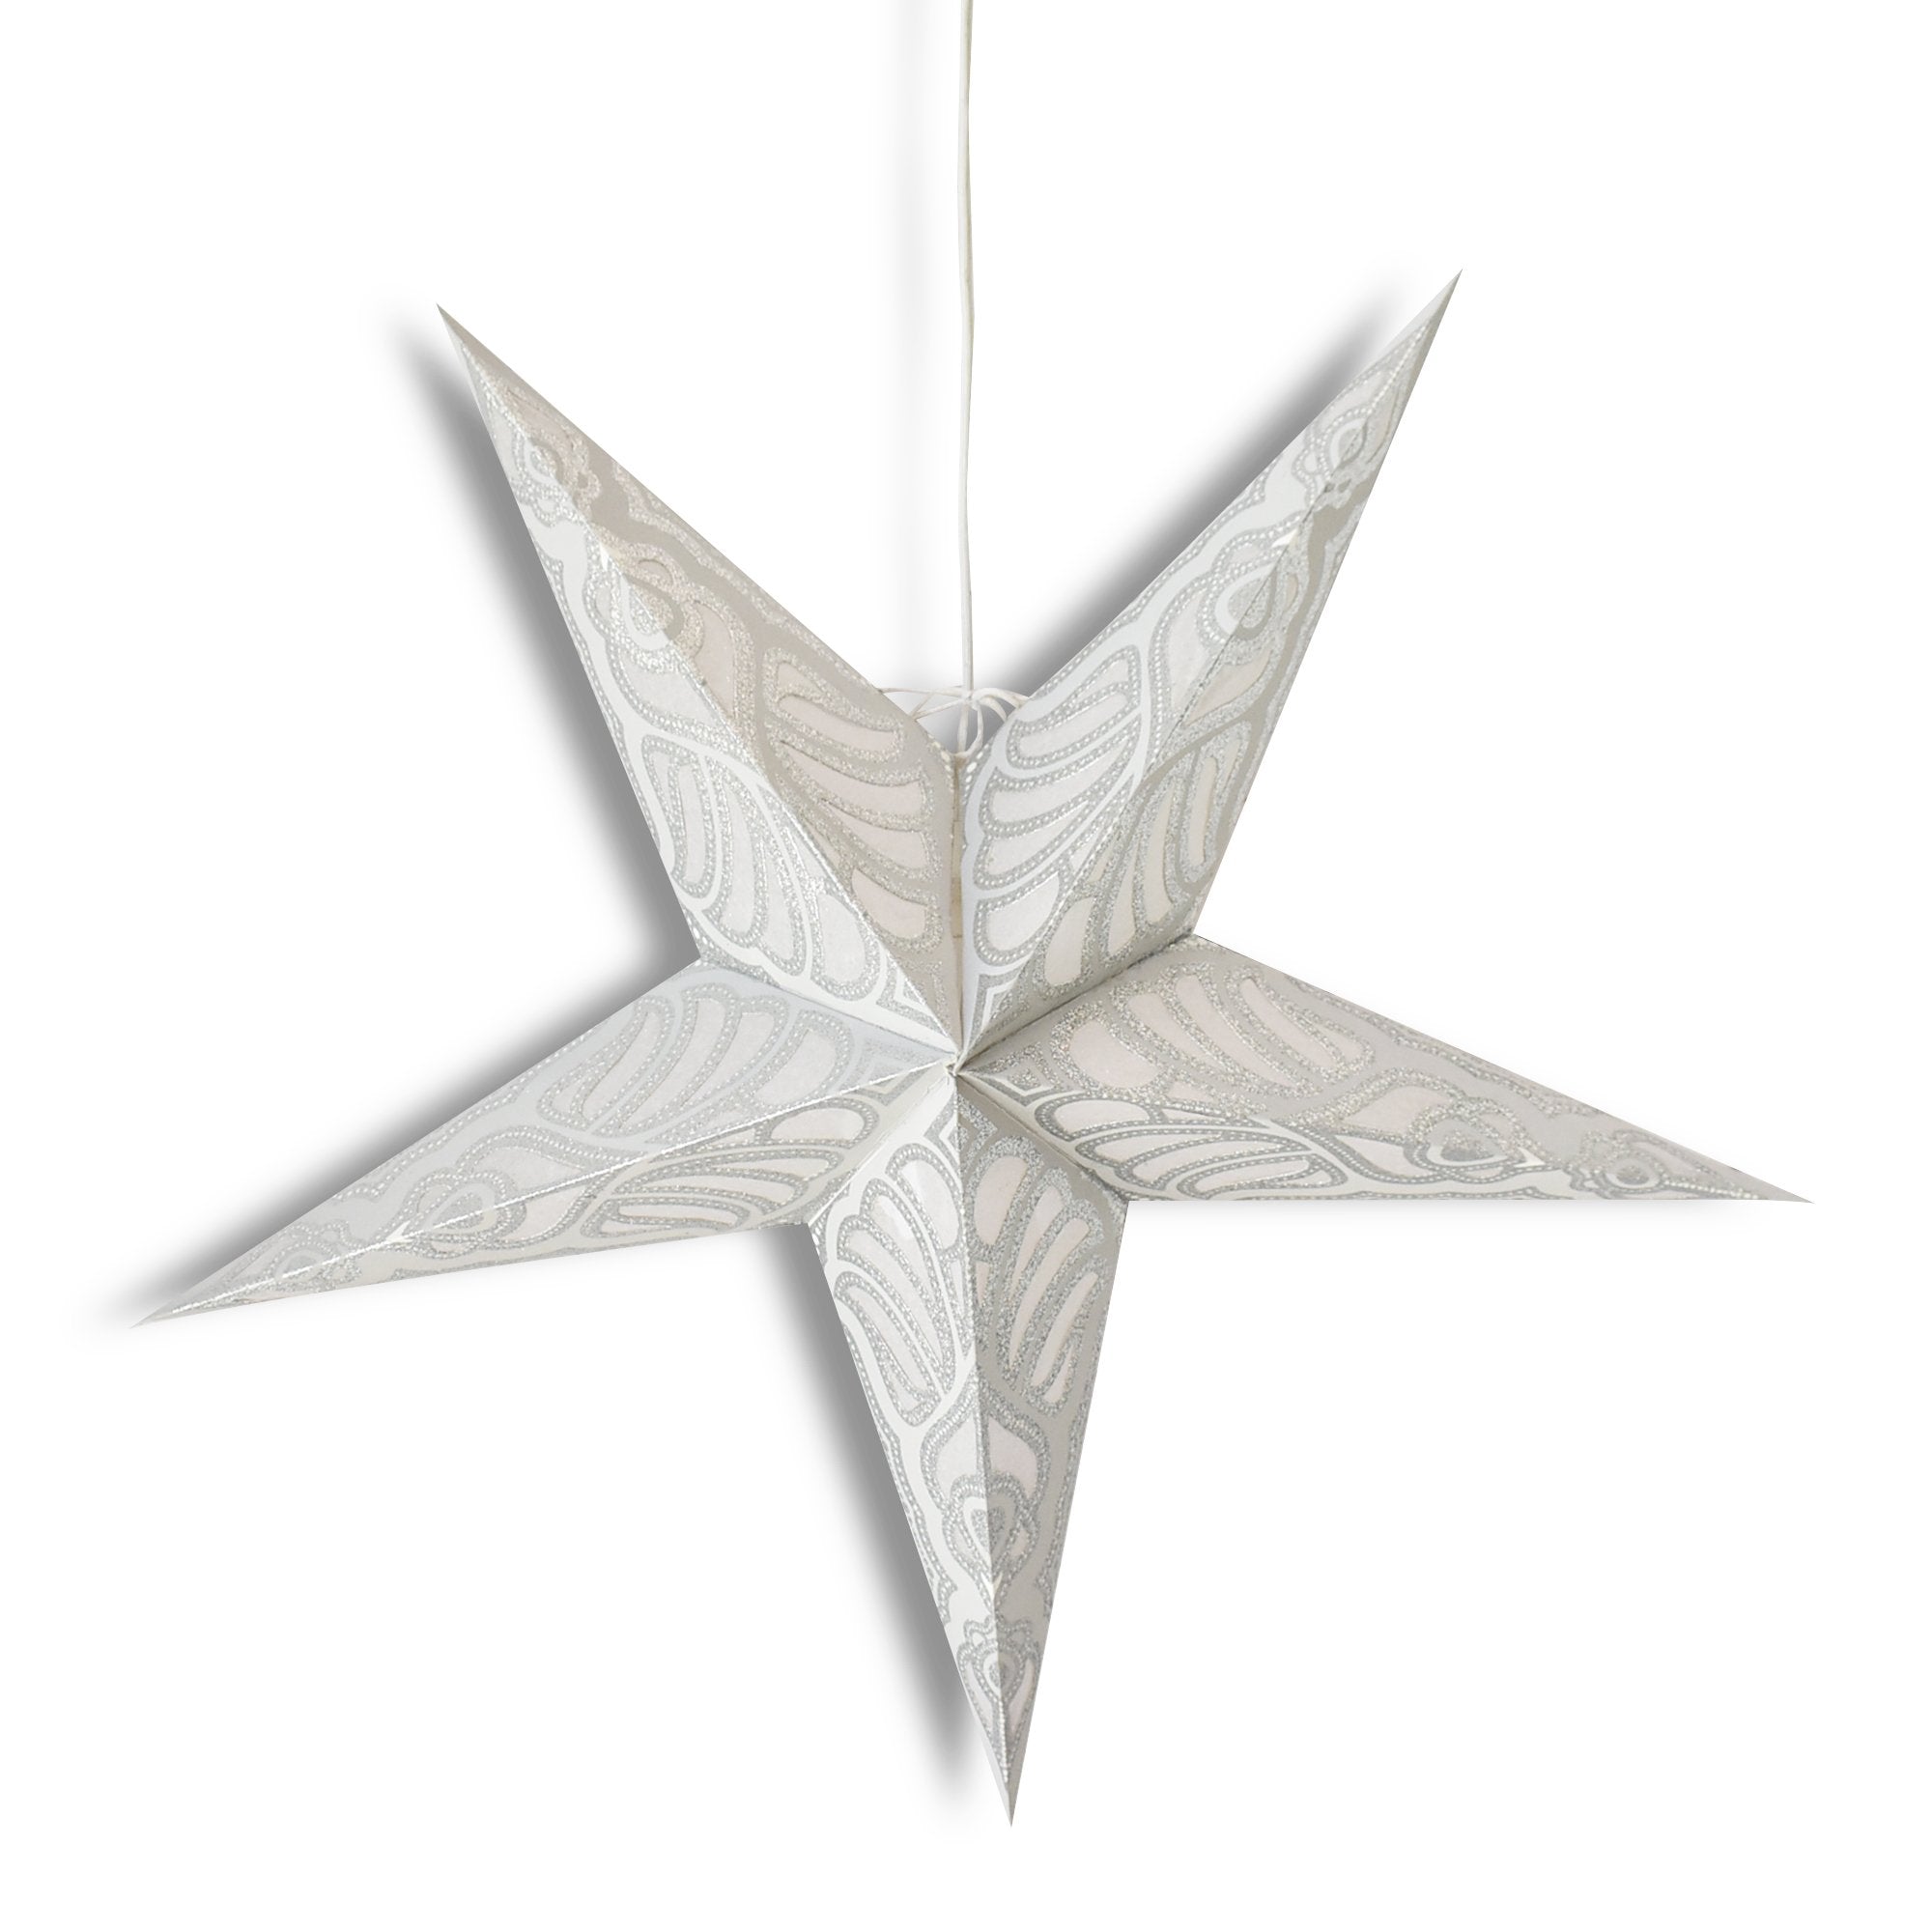 24" Silver Parrot Glitter Paper Star Lantern, Hanging Wedding & Party Decoration - PaperLanternStore.com - Paper Lanterns, Decor, Party Lights & More